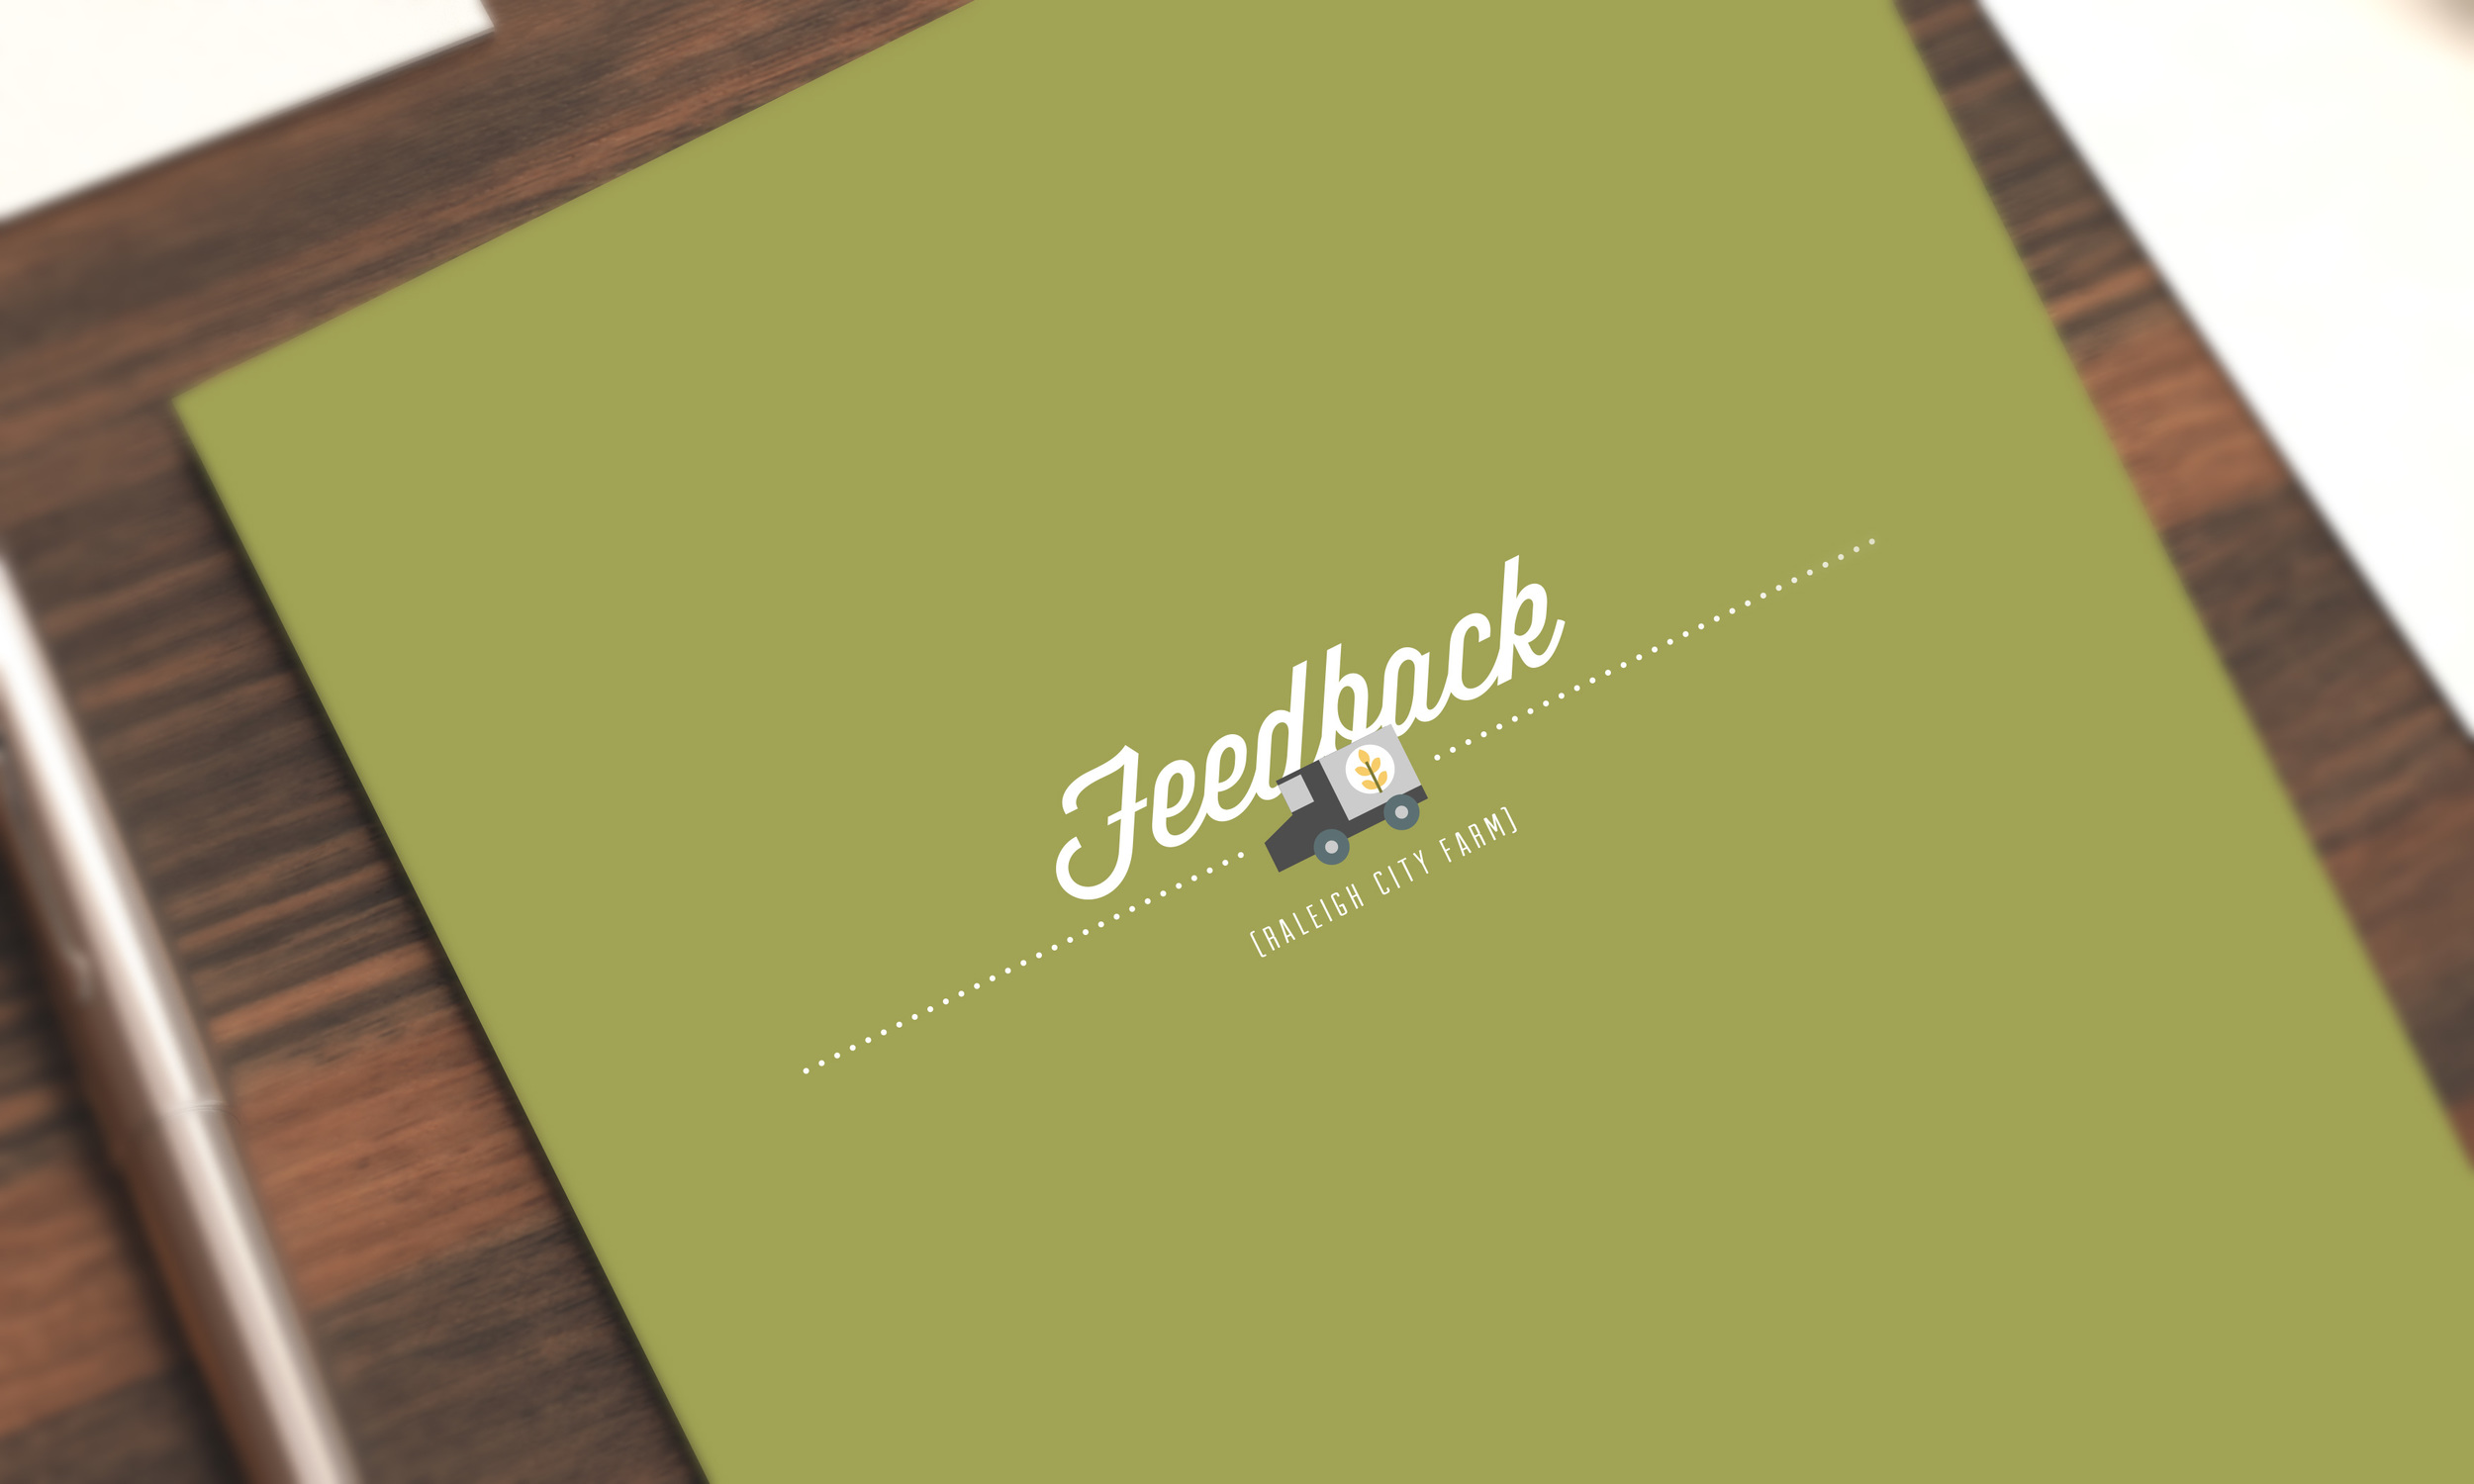 feedback-book.jpg